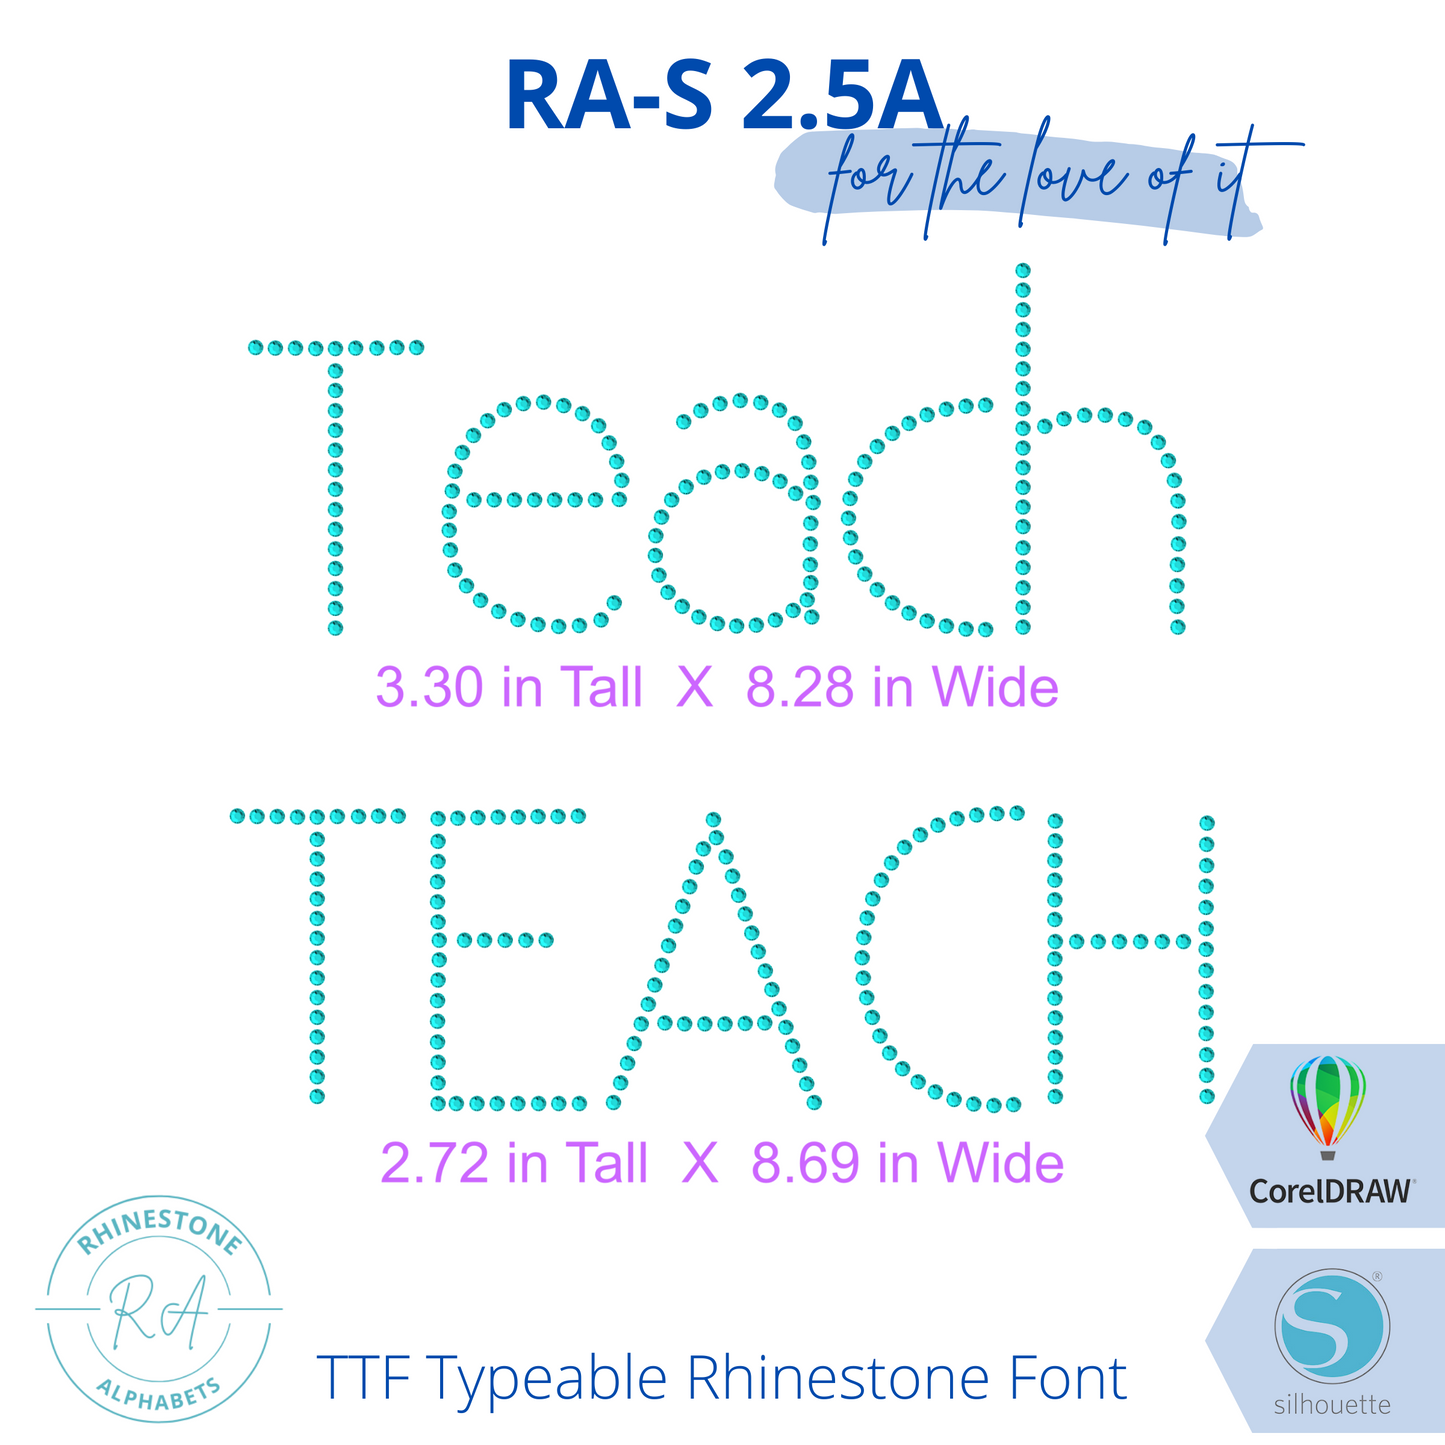 RA-S Round 2.5A - RhinestoneAlphabets